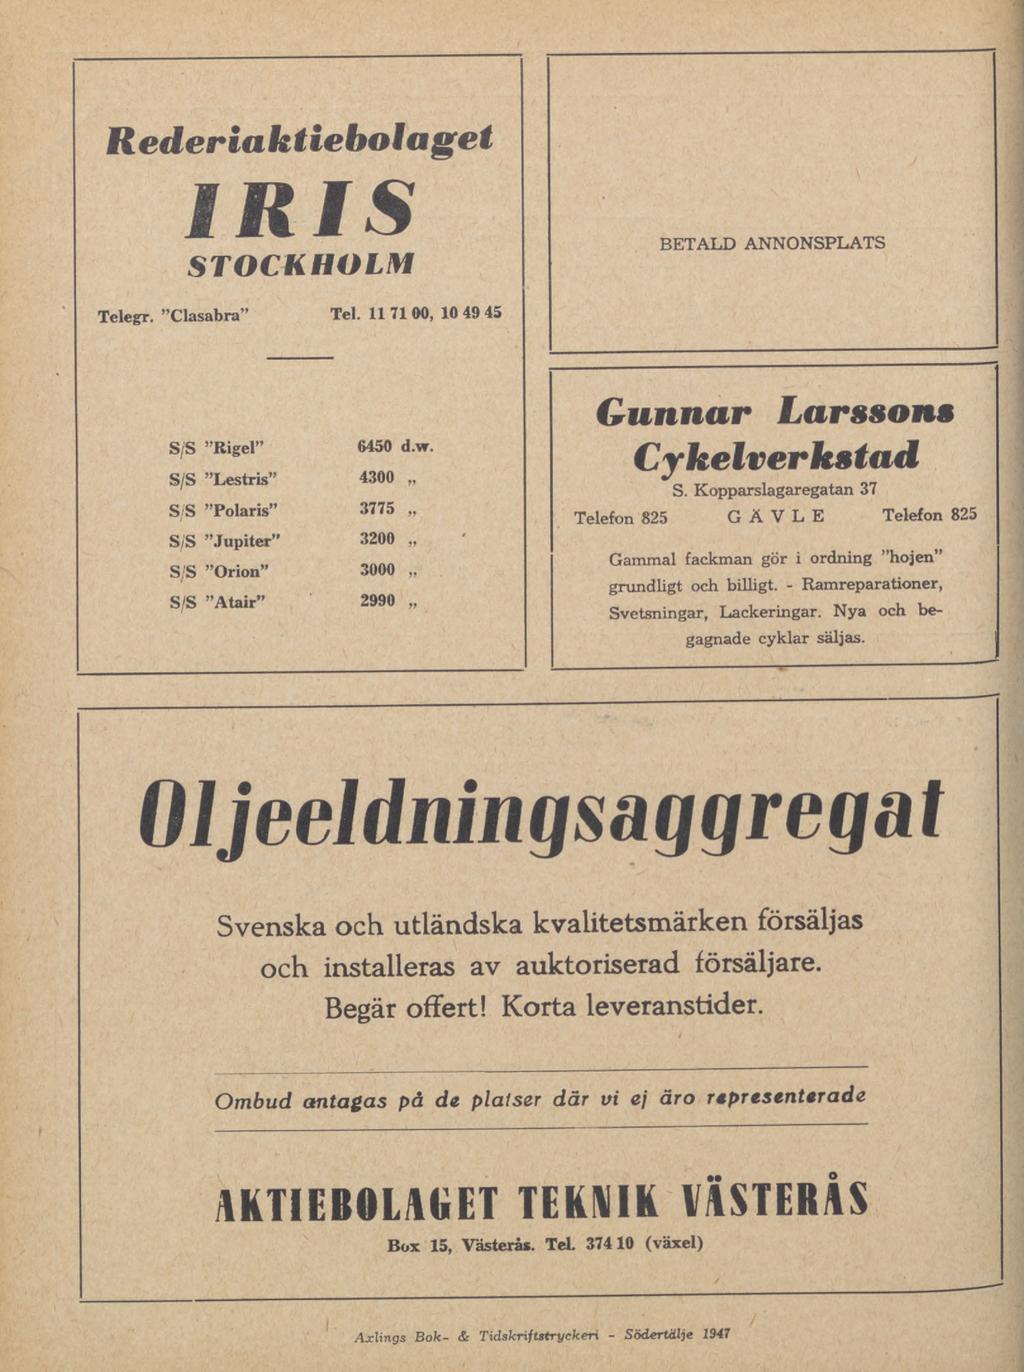 Rederiaktiebolaget IRIS STOCKHOLM Telegr. Clasabra Tel. 11 71 00, 10 49 45 S/S Rigel 6450 d.w.